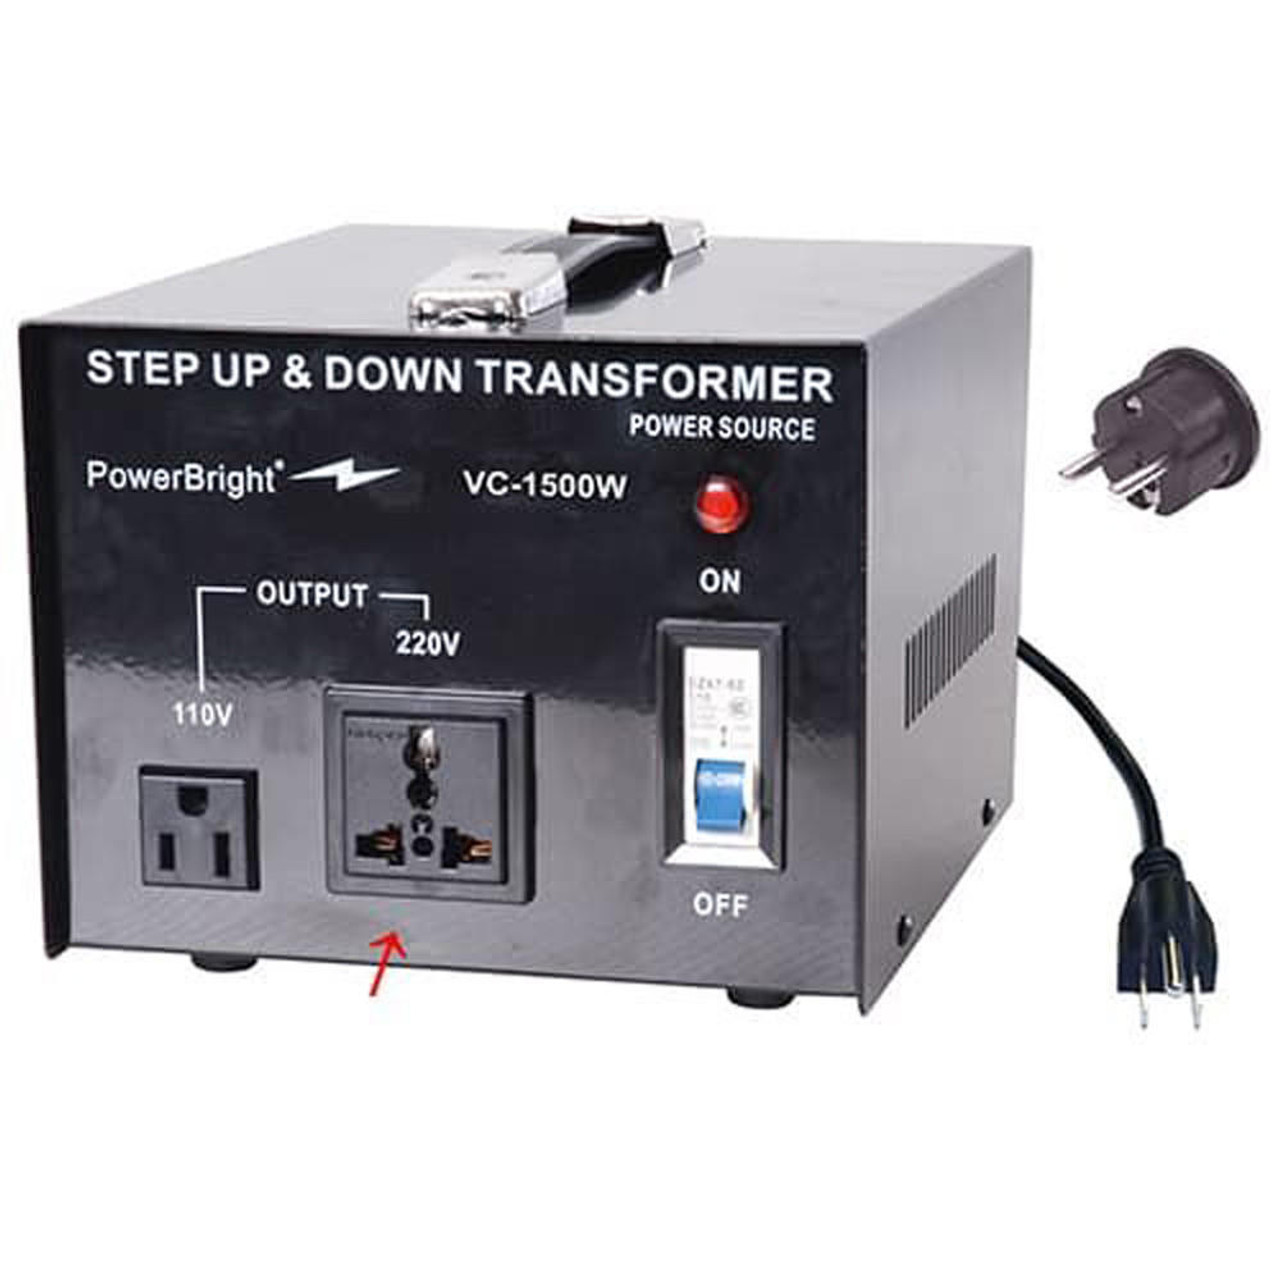 What is a Step Down Transformer?